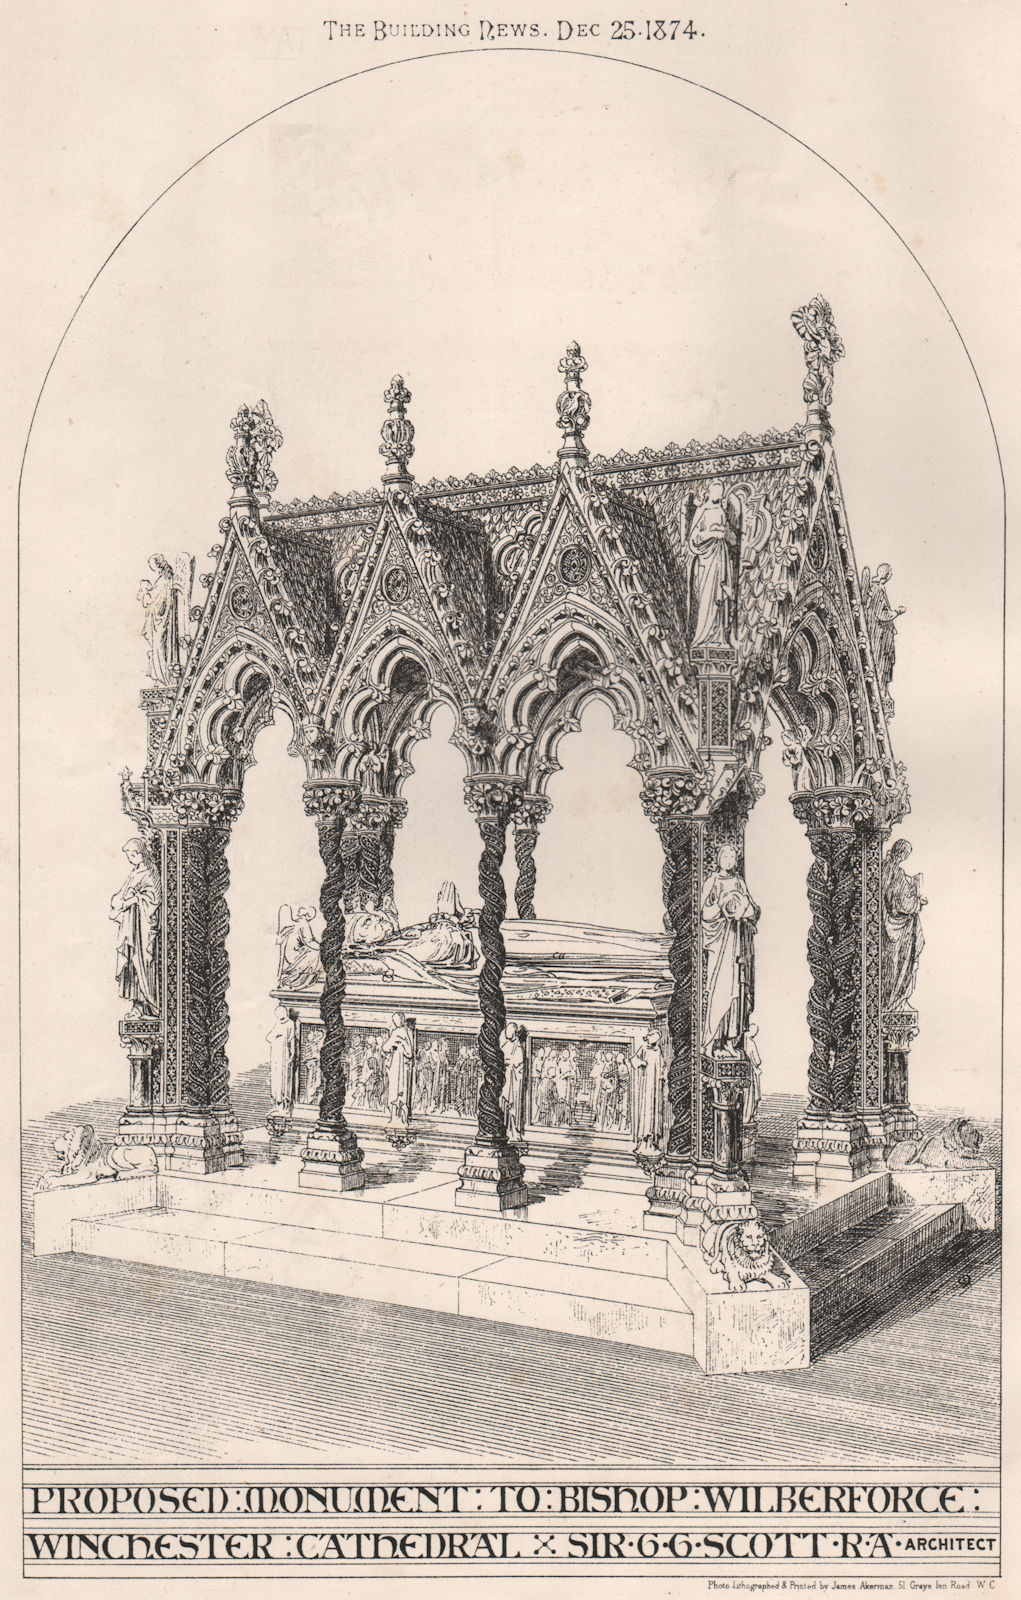 Bishop Wilberforce monument, Winchester Cathedral; Sir G.G. Scott Archt 1874